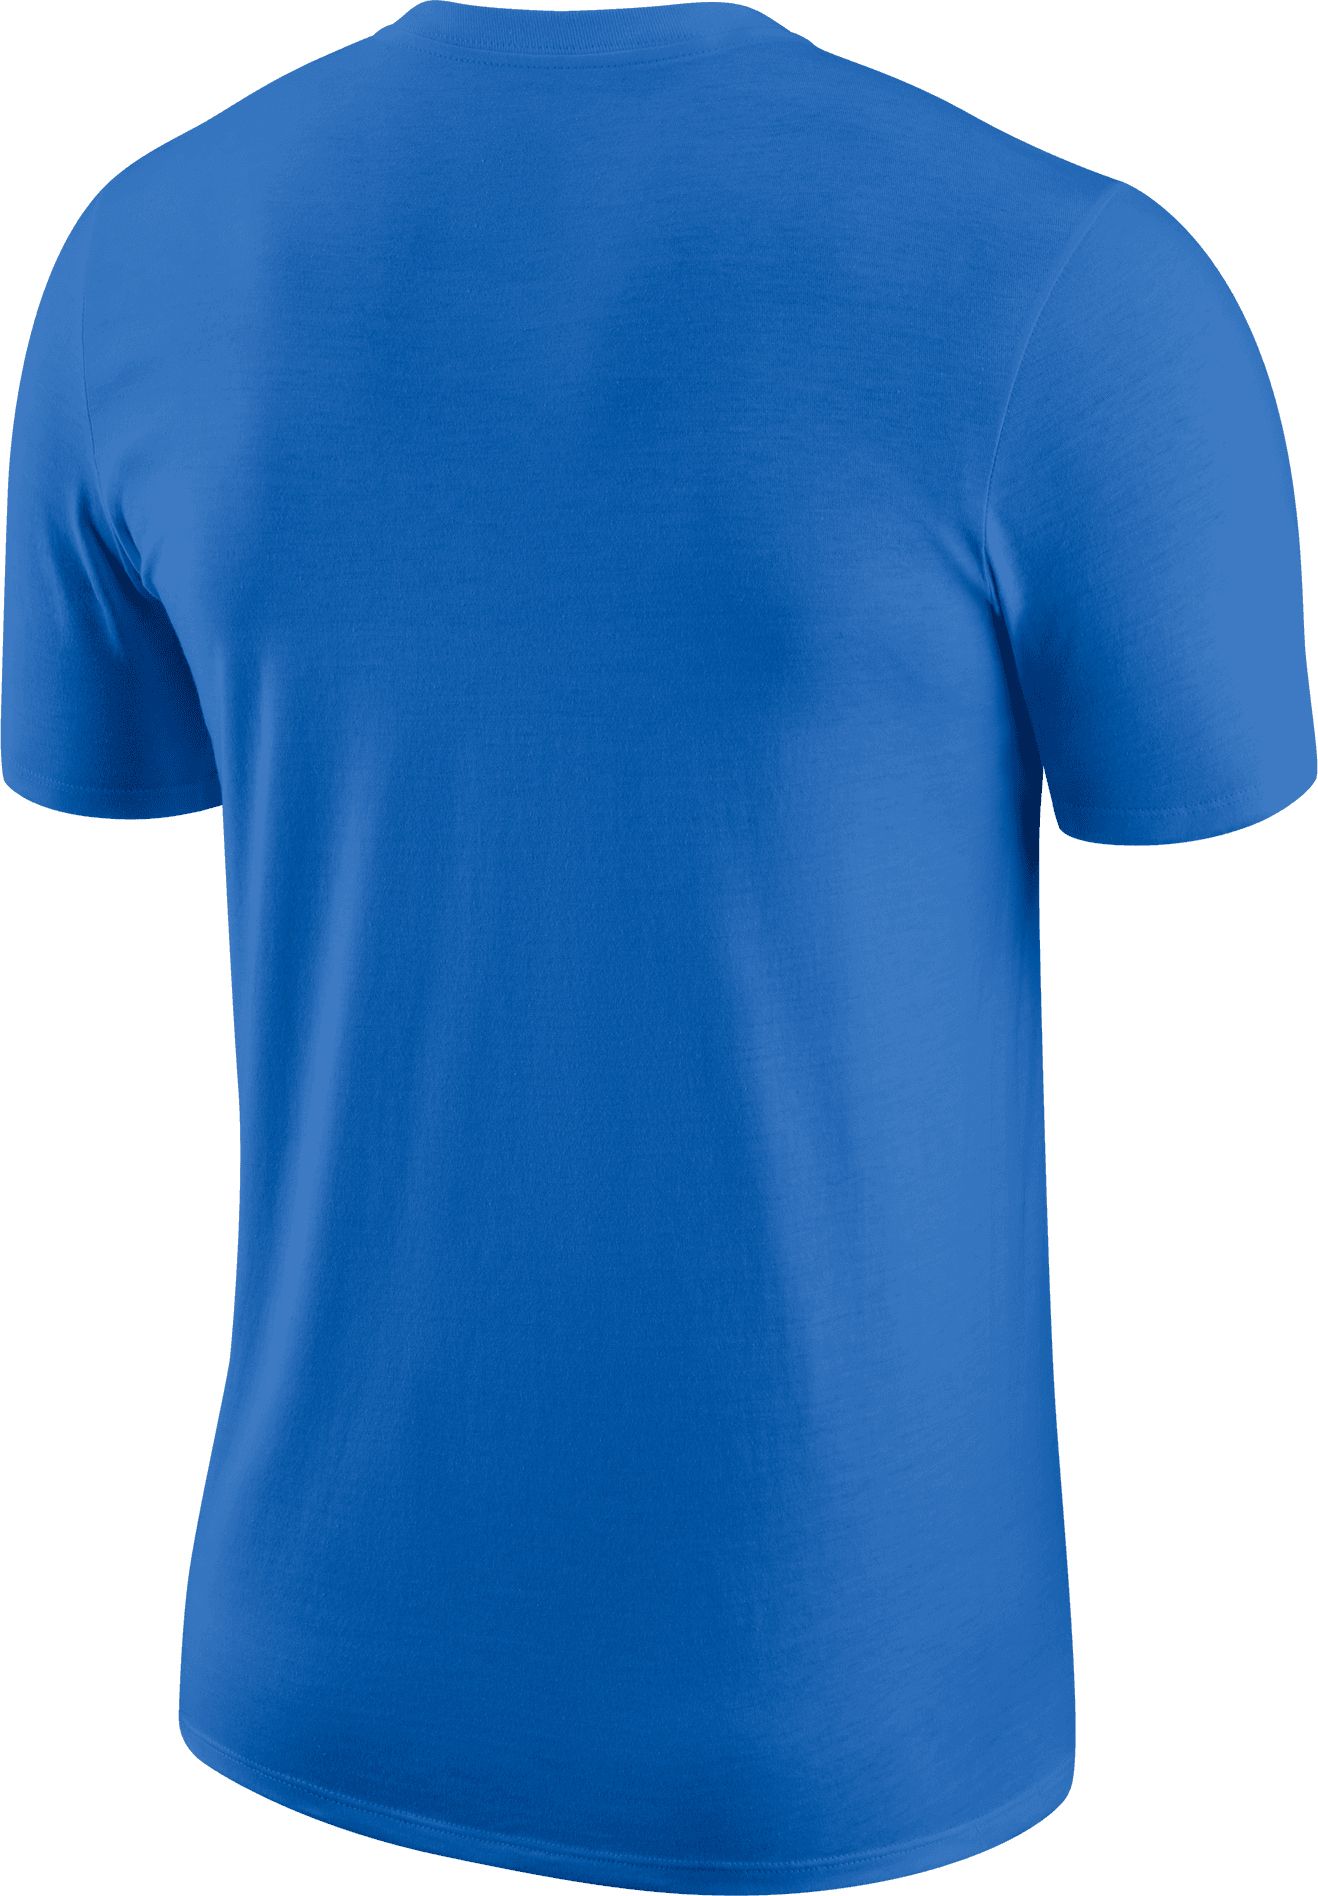 Nike Men's UCLA Bruins True Blue University Arch Logo T-Shirt